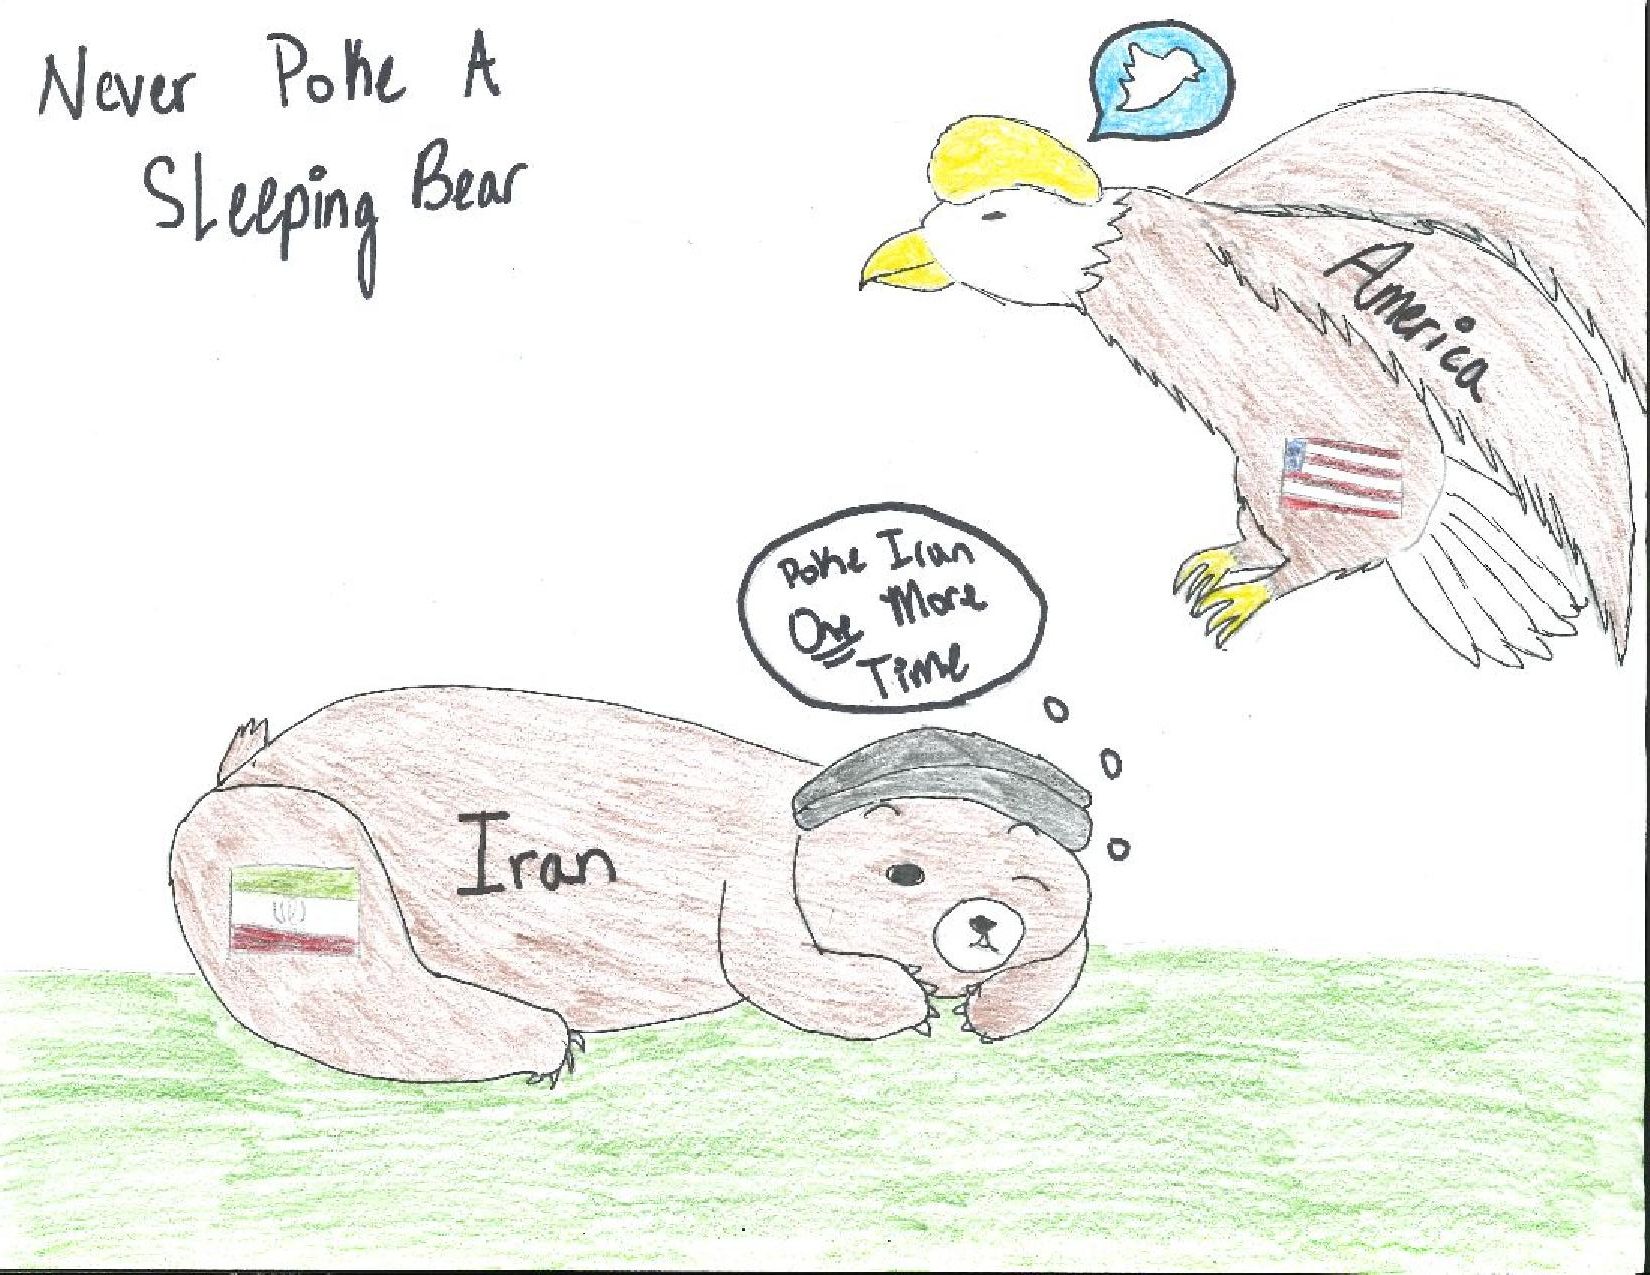 Editorial Cartoon: Tension between America and Iran increases